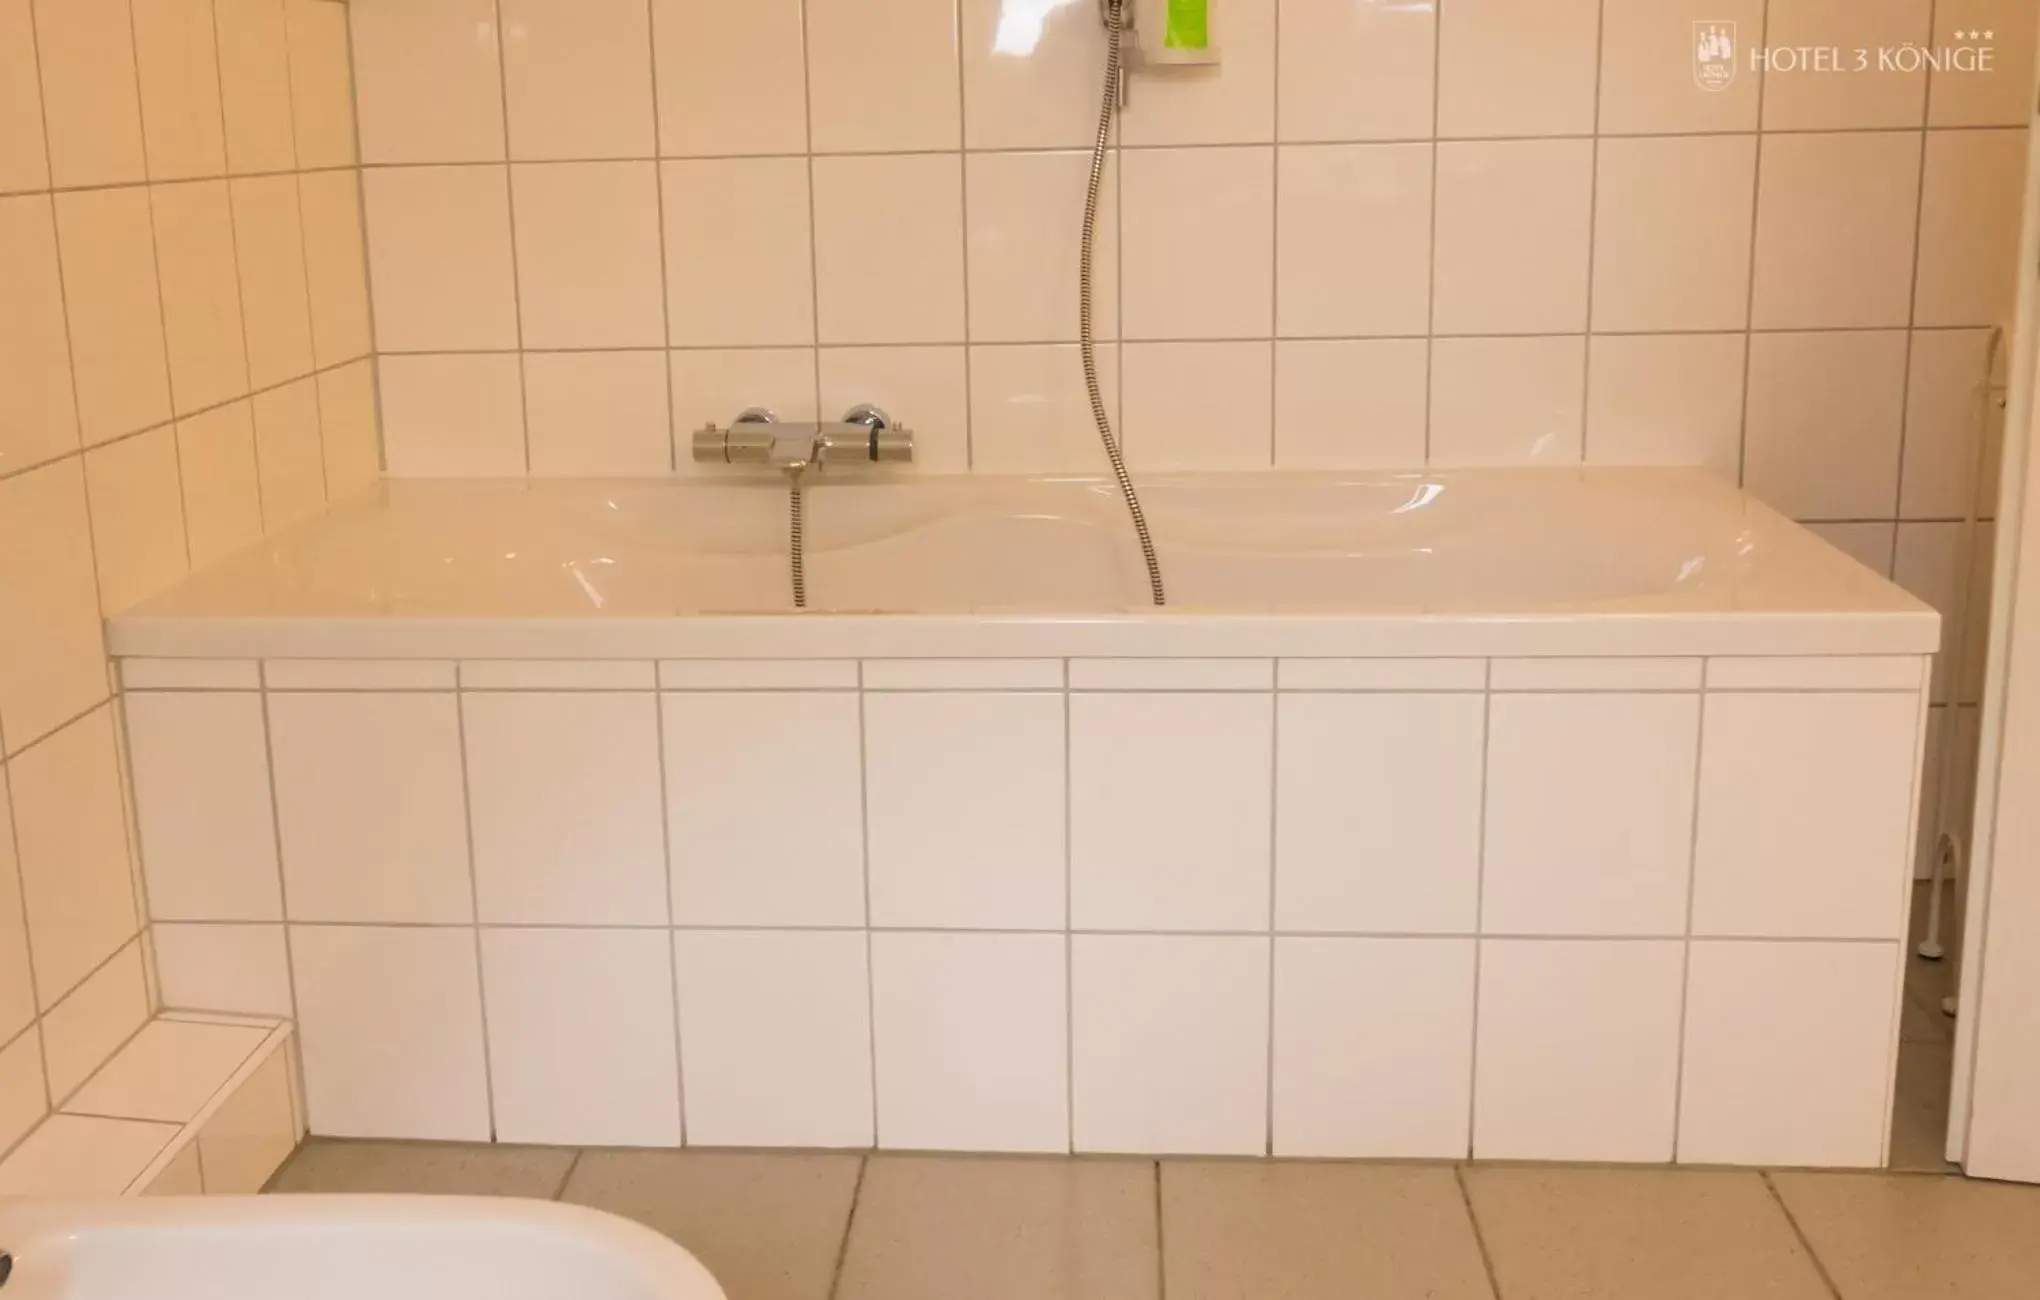 Bathroom in Hotel 3 Könige